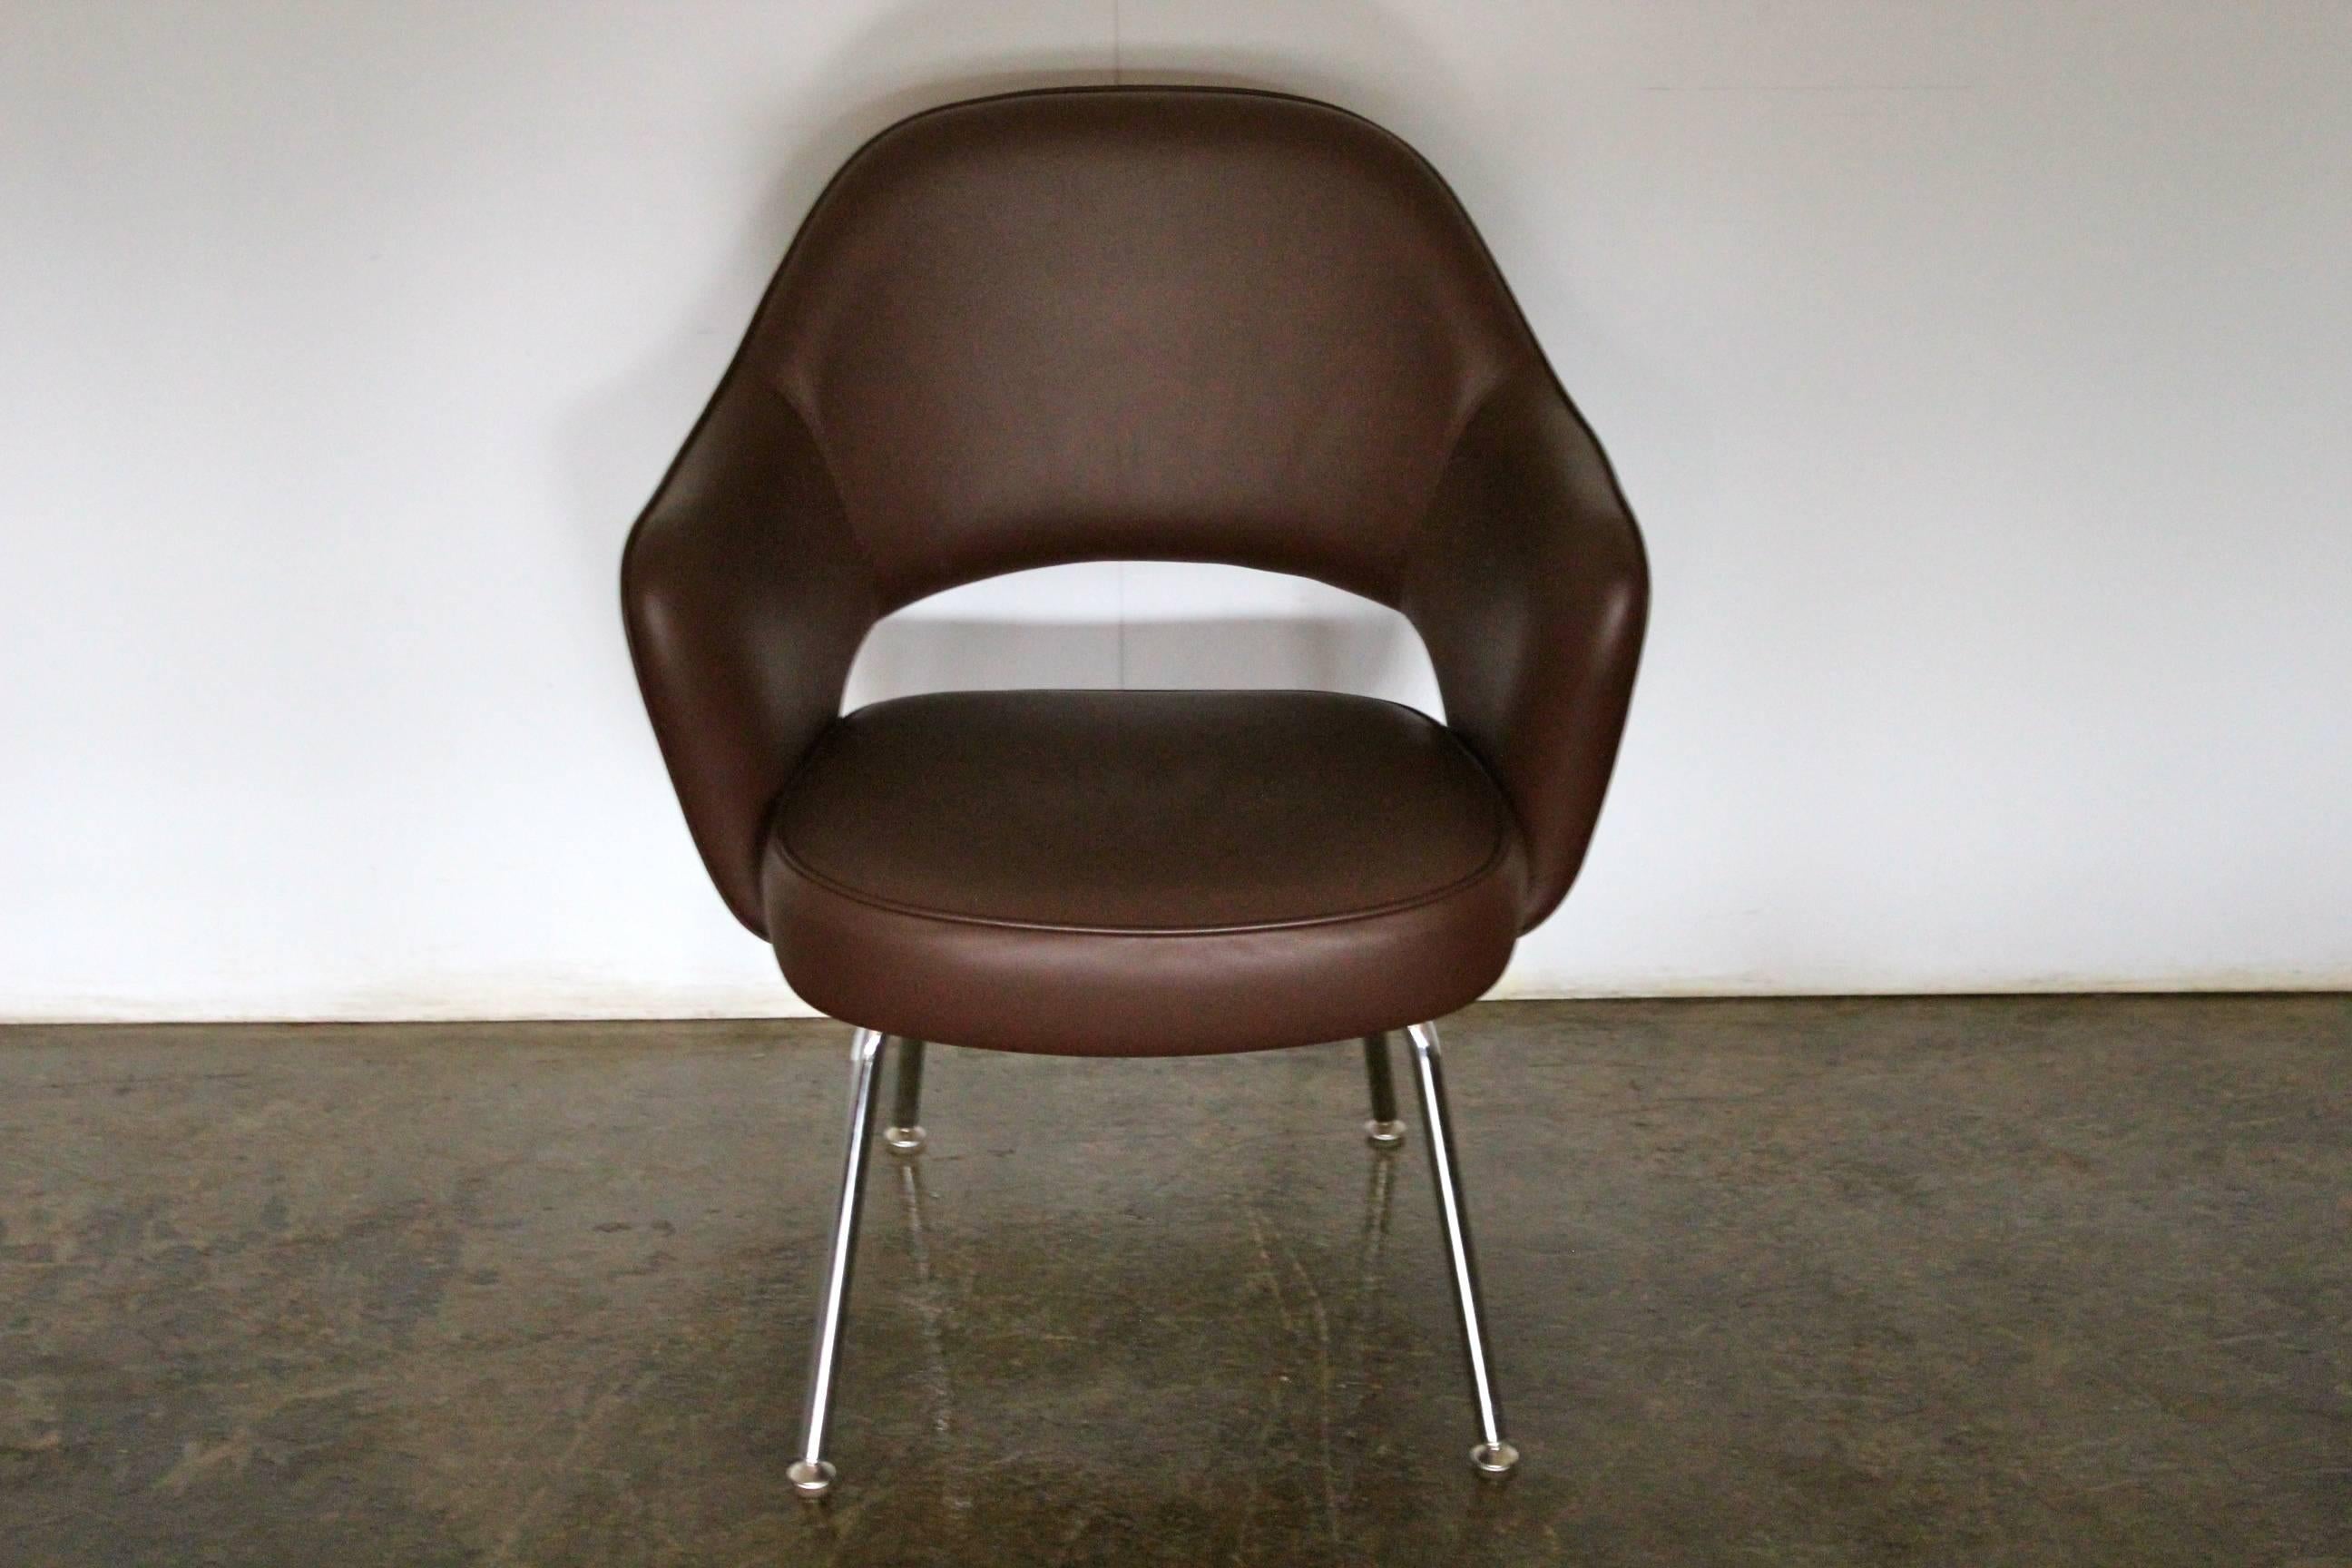 Modern Knoll Studio “Saarinen Executive” Armchair in “Volo” Brown Leather For Sale